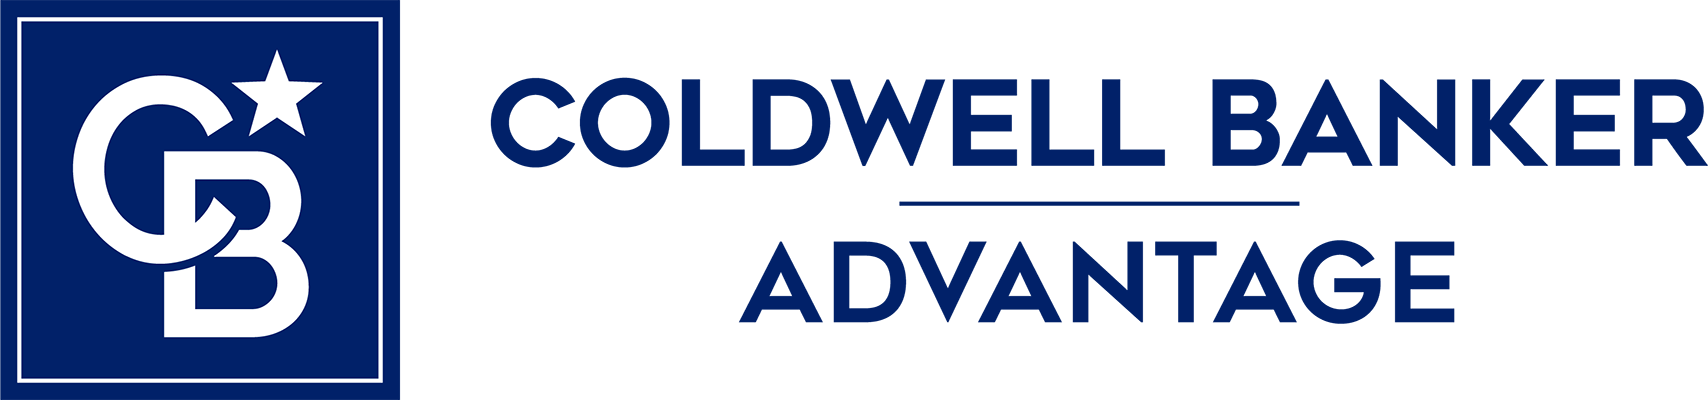 Will Roberts - Coldwell Banker Advantage Logo